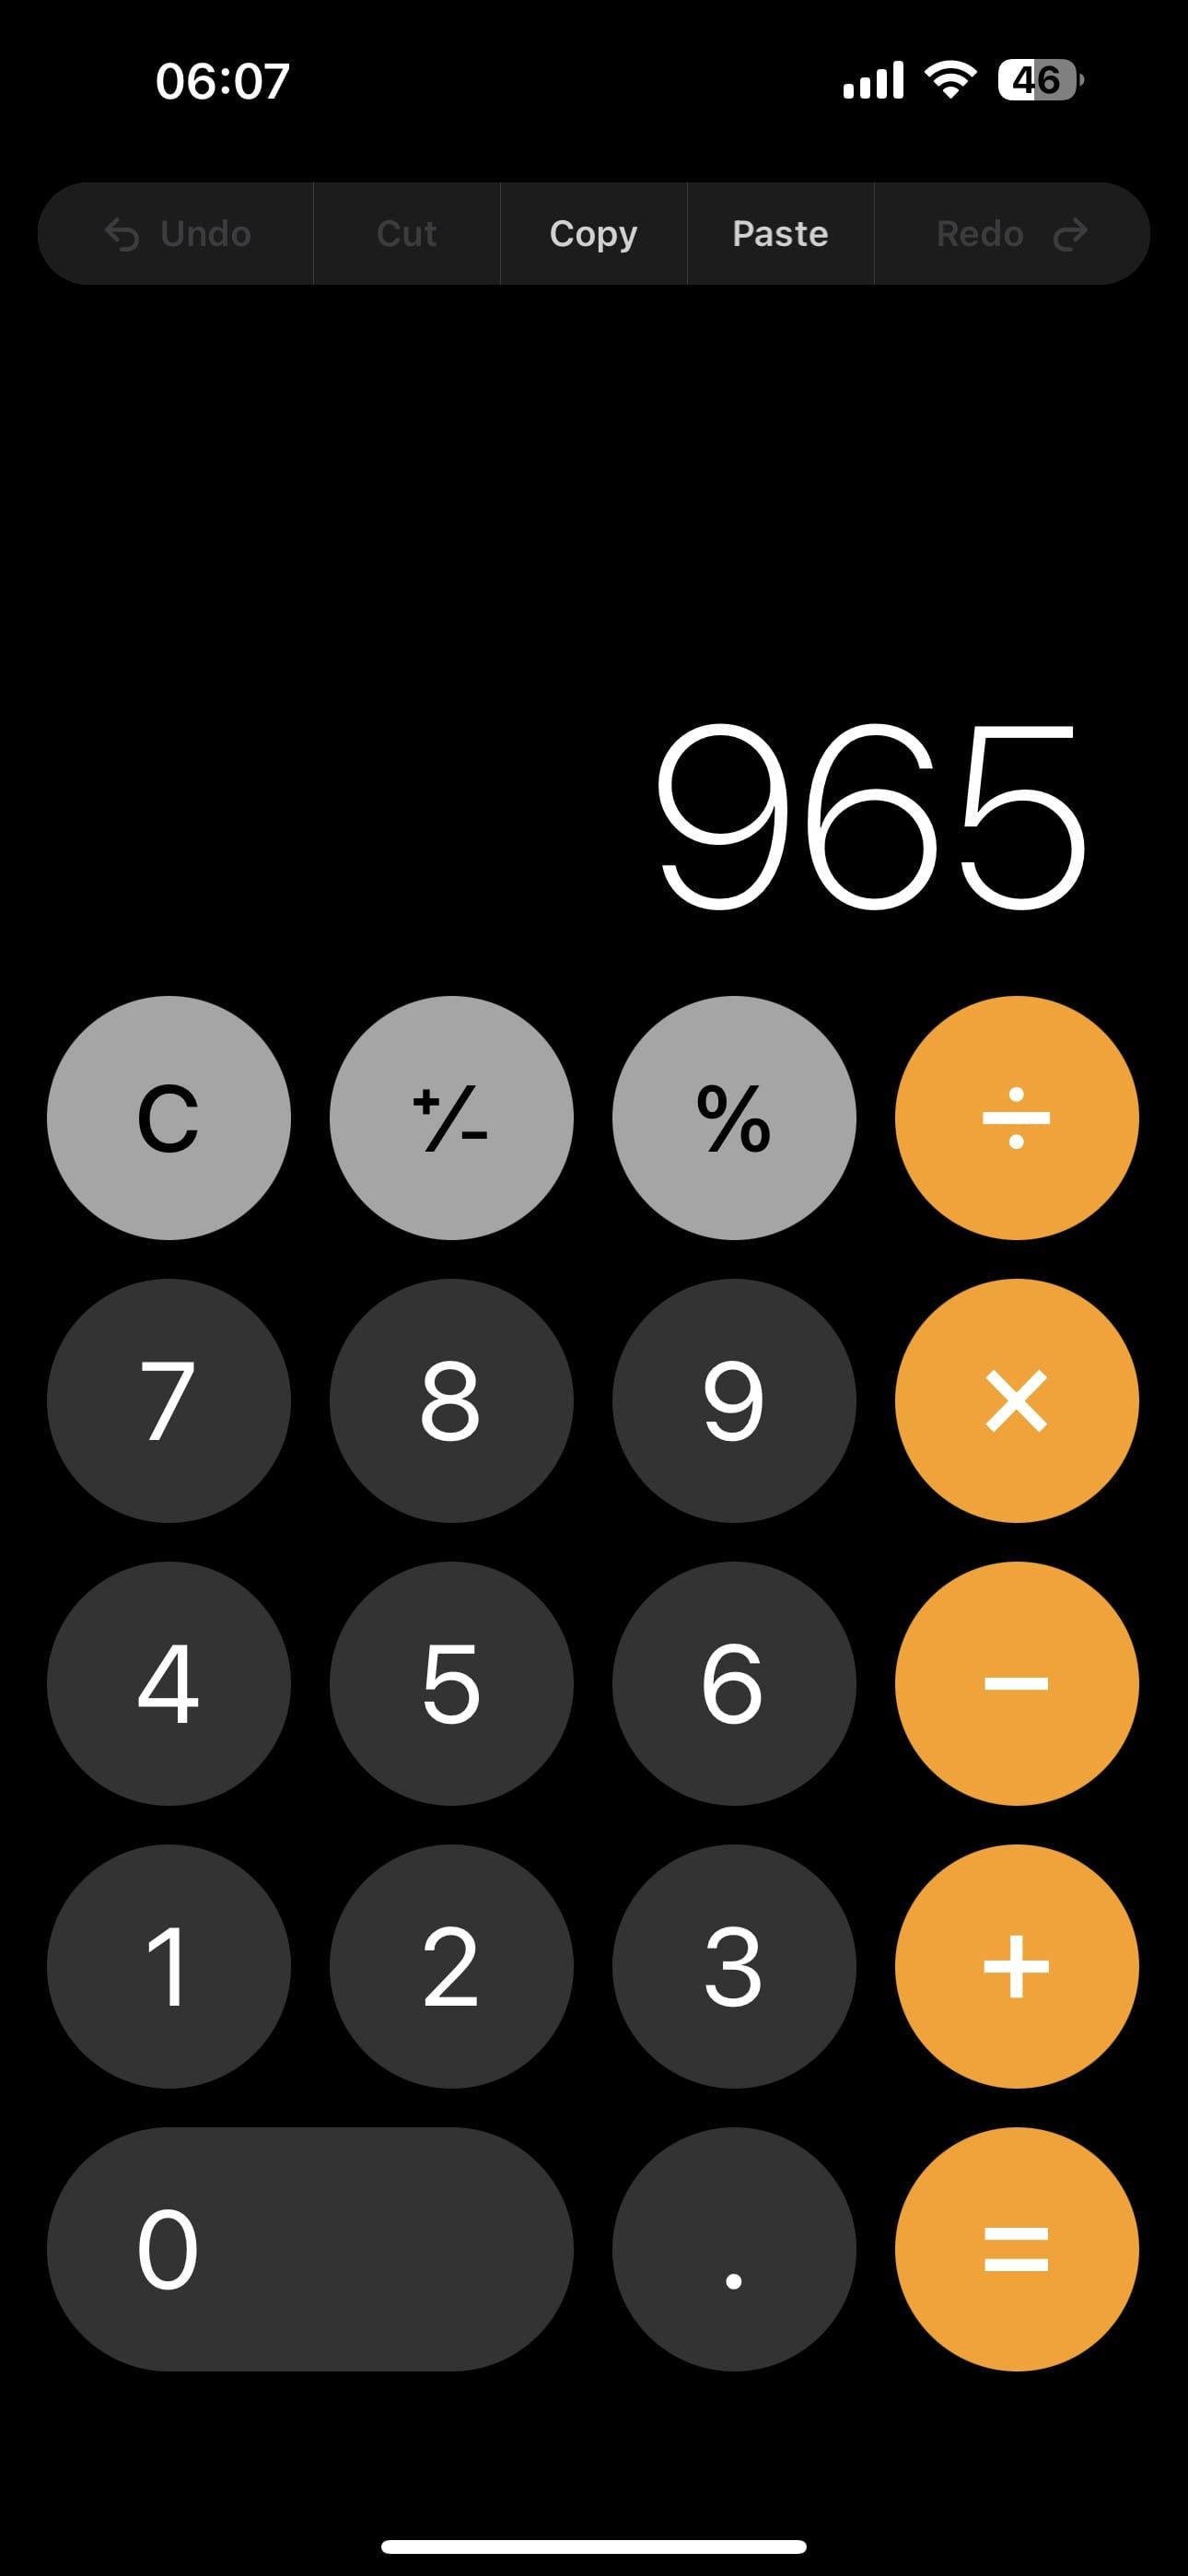 Copy iPhone calculator results